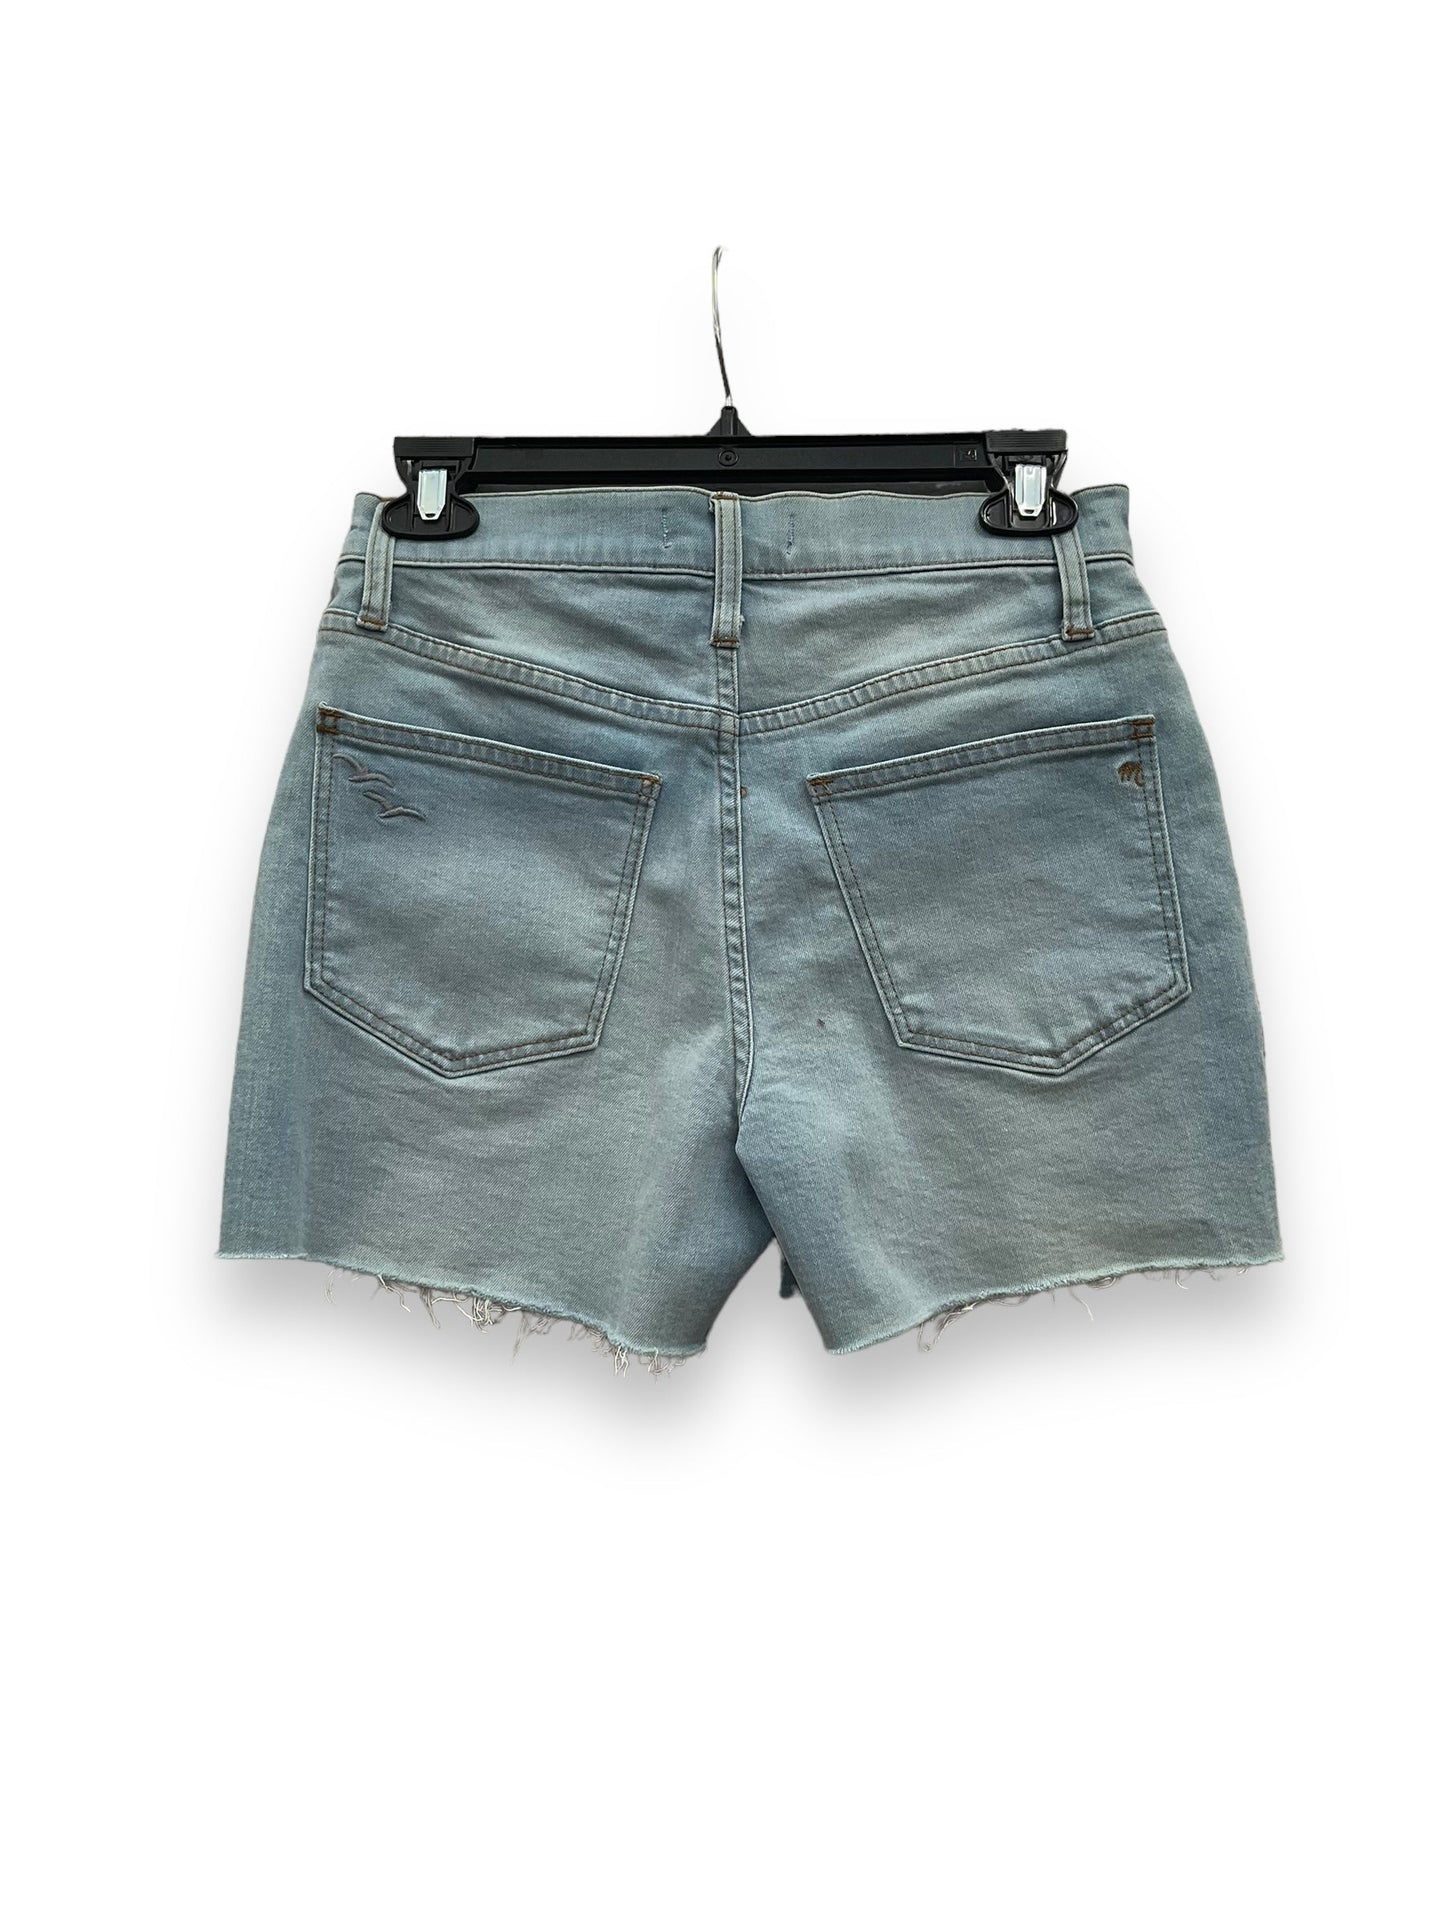 Blue Denim Shorts Madewell, Size 2